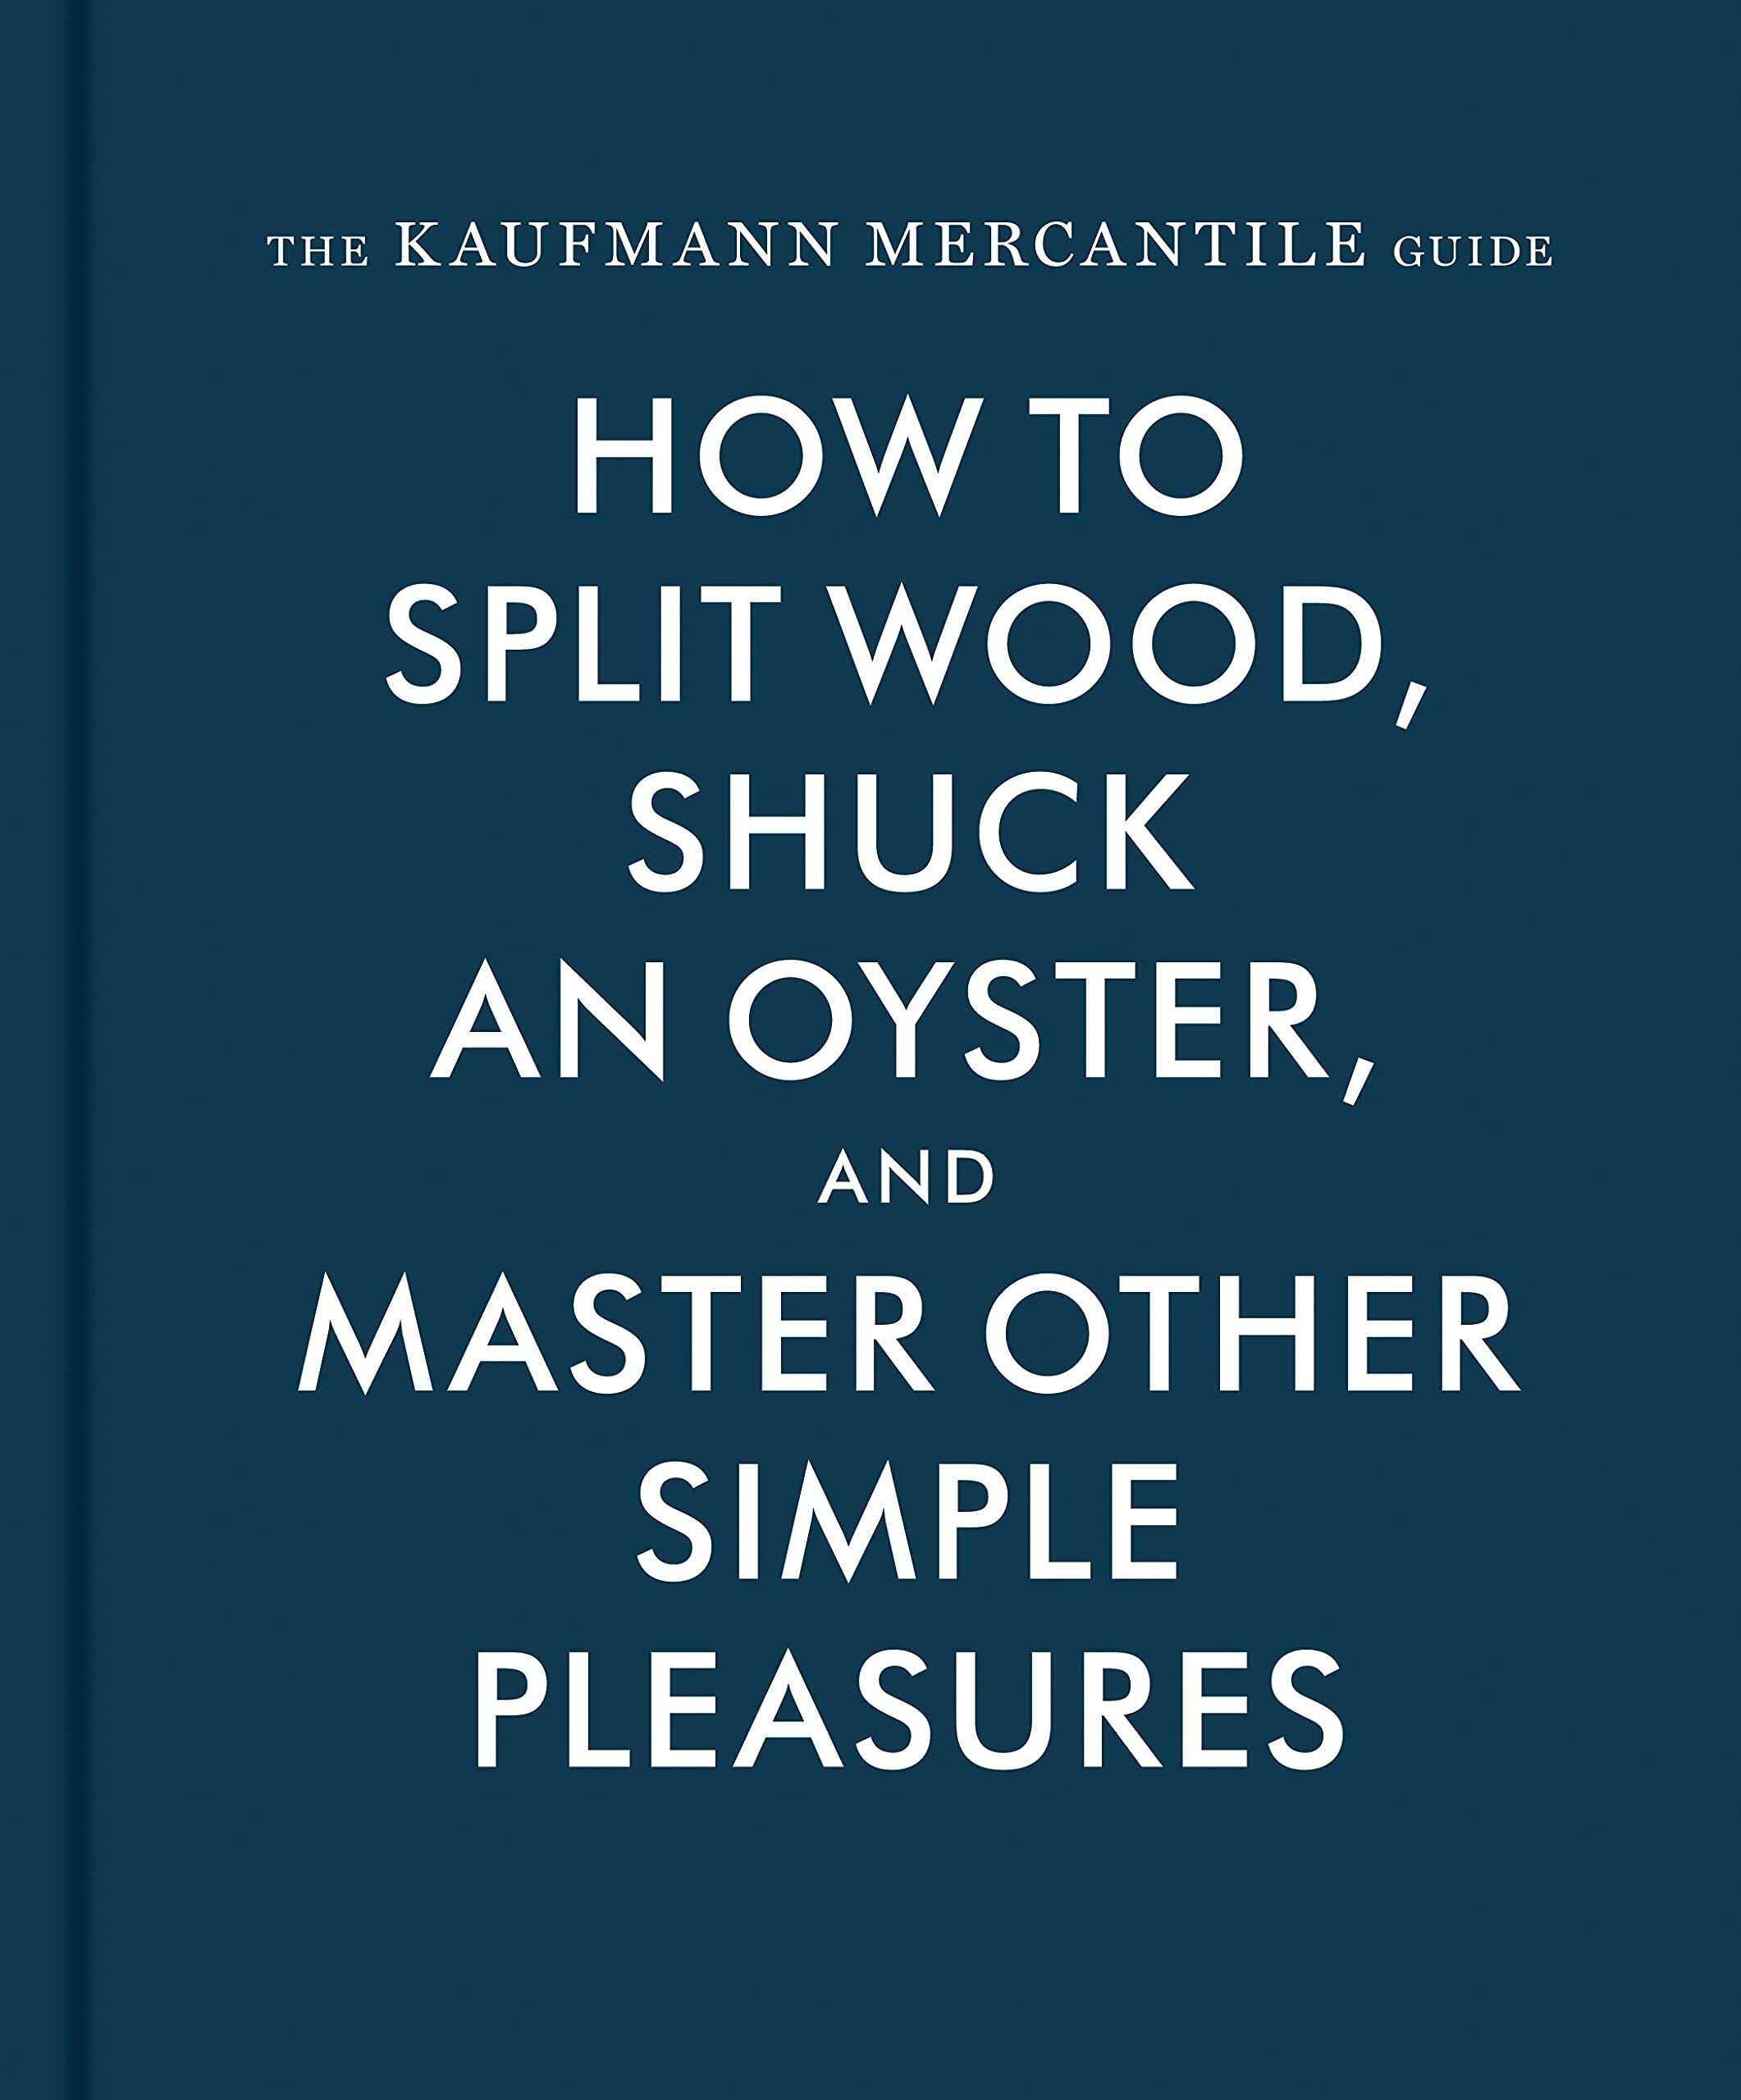 The Kaufmann Mercantile Guide Book